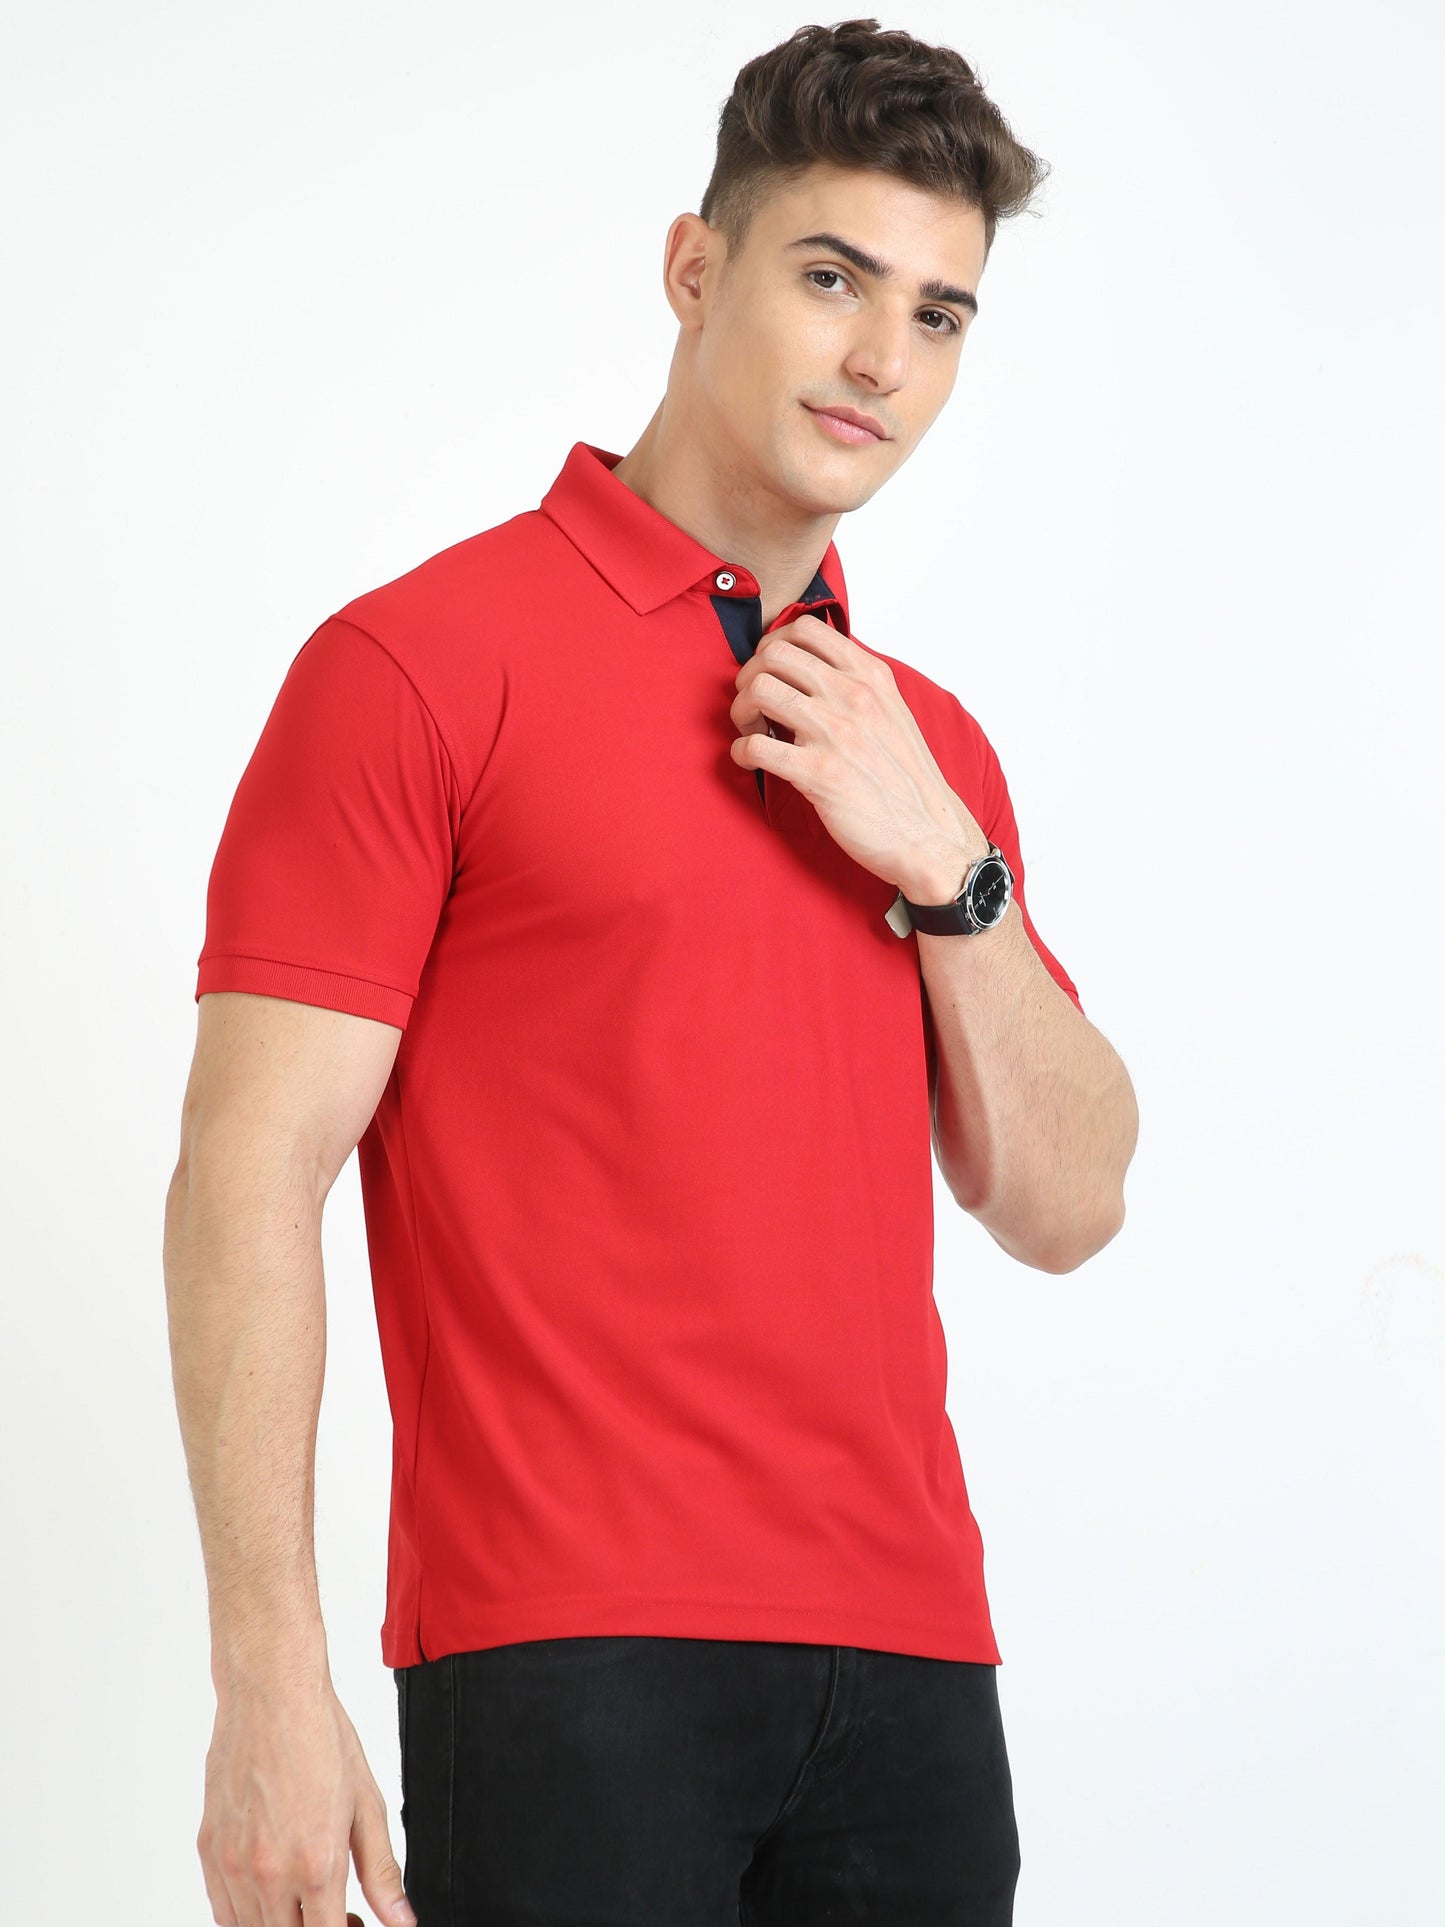 Arrow Red Men's Polo T-shirt